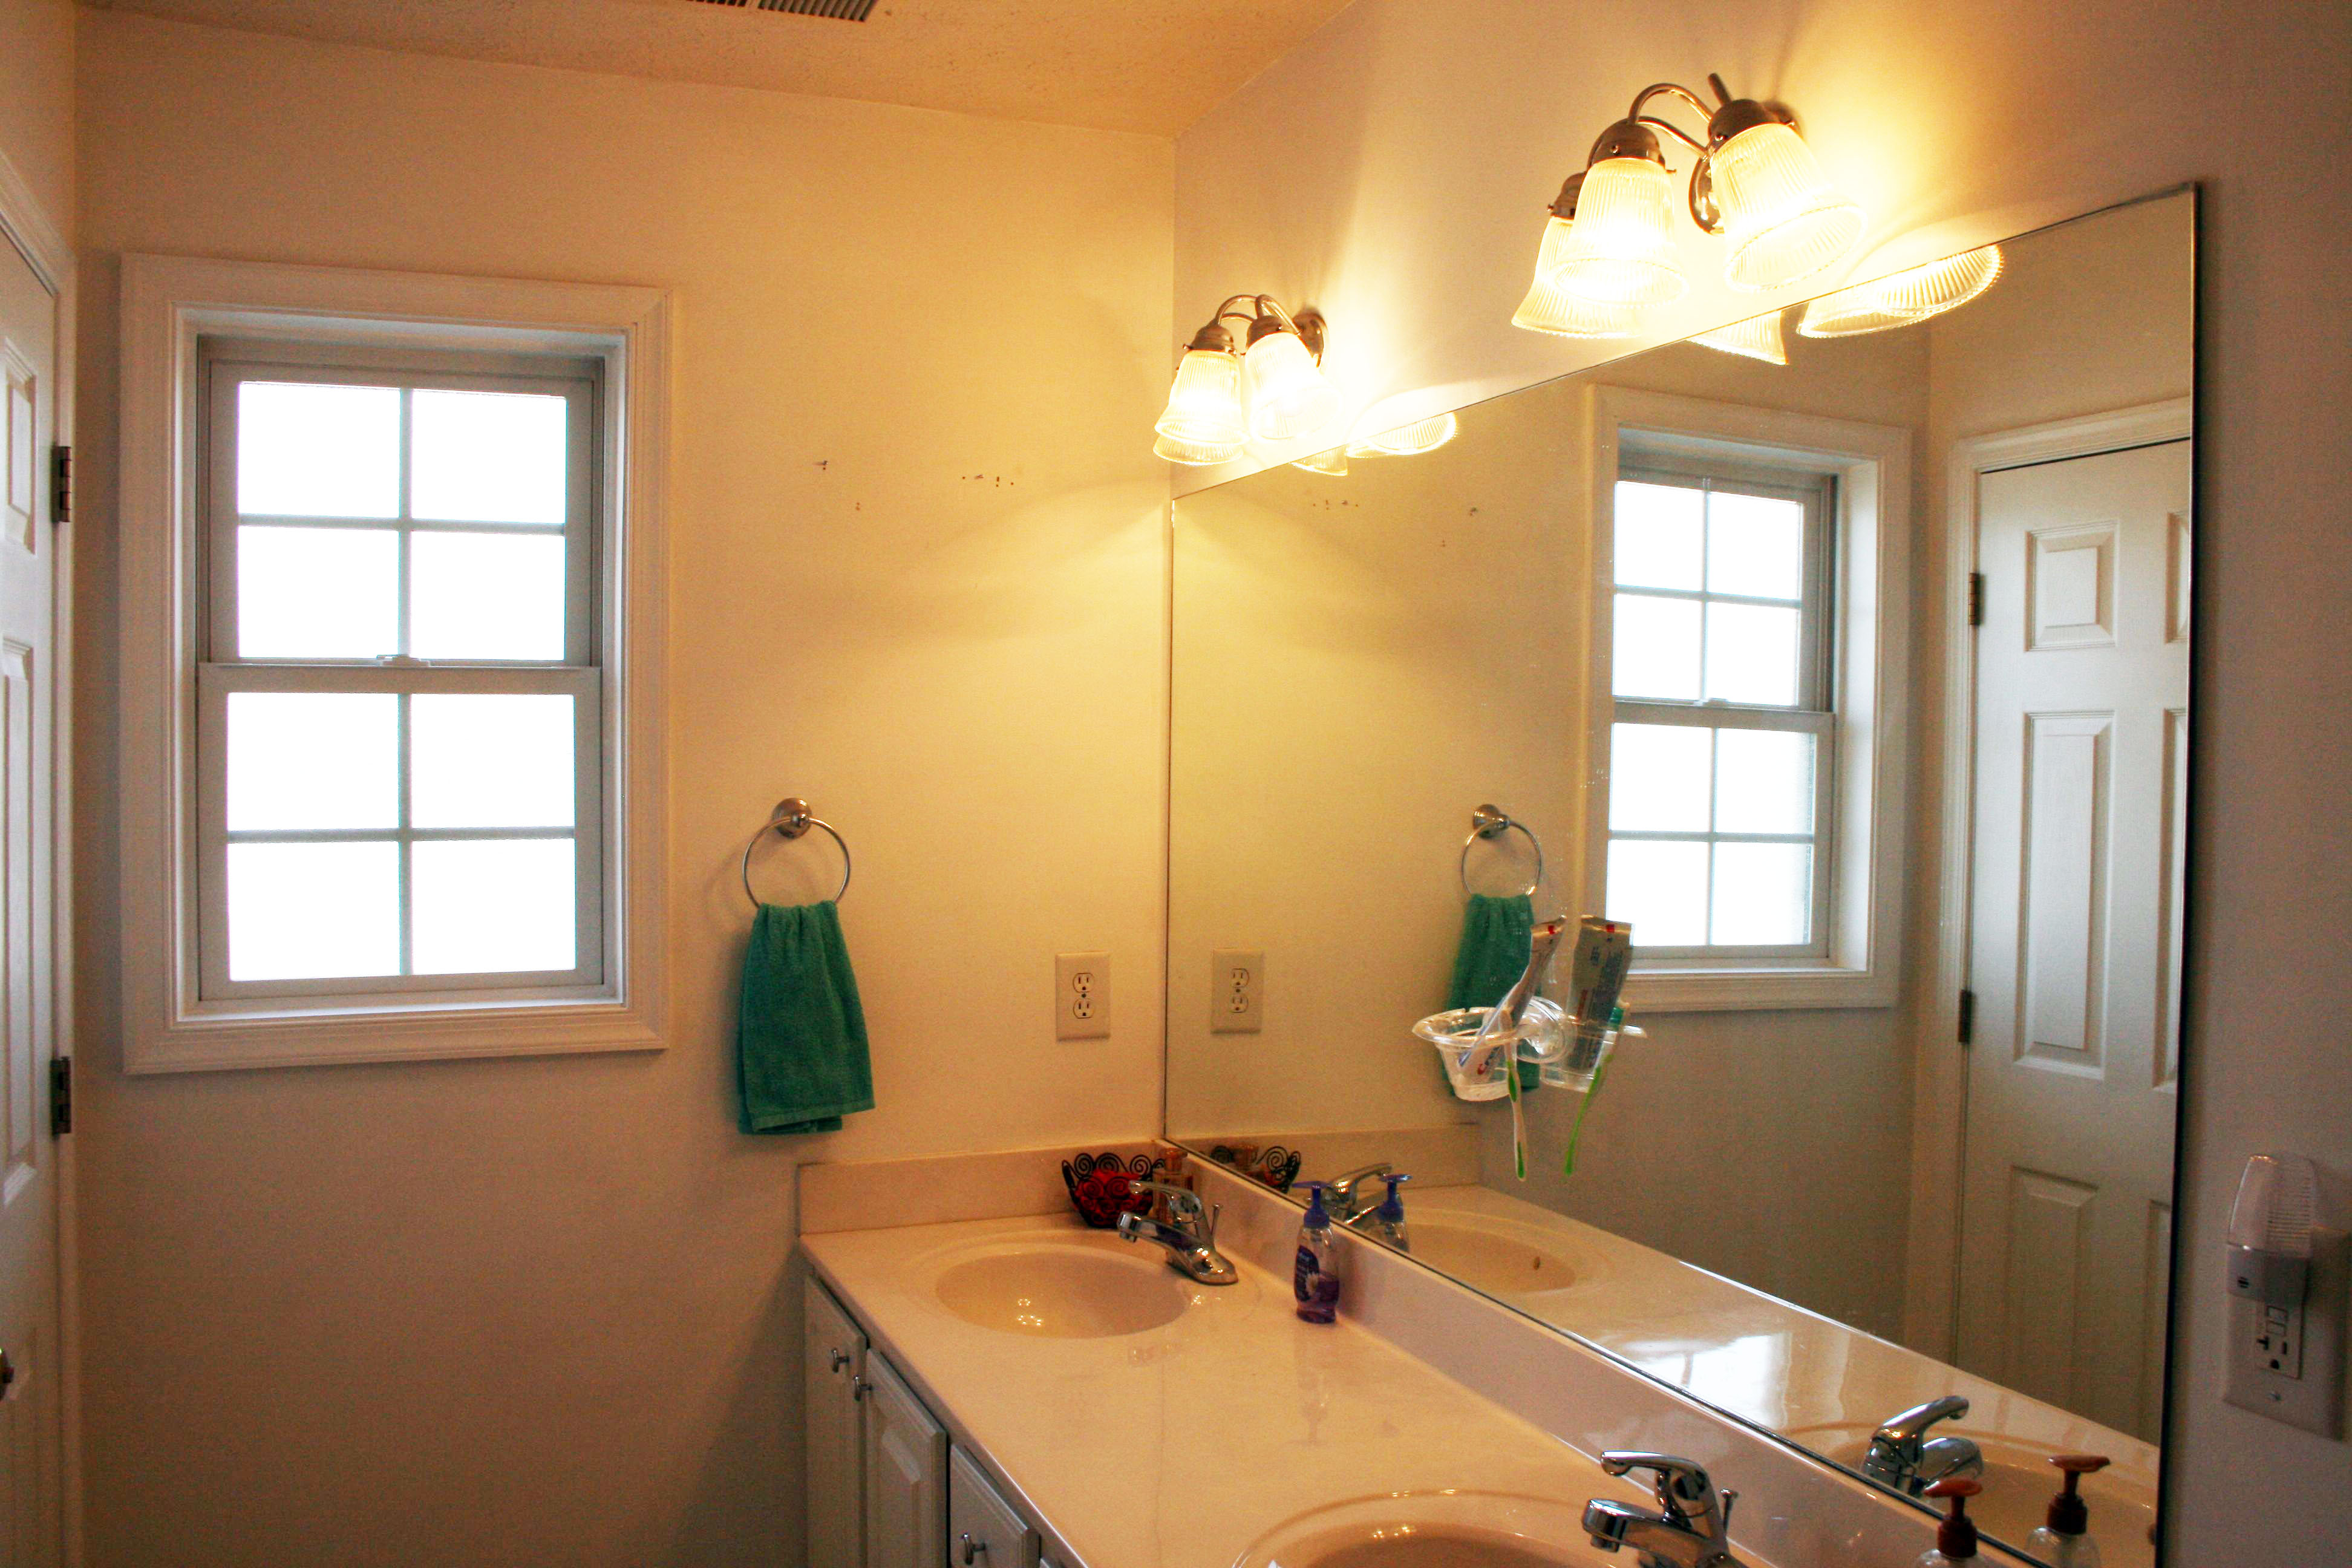 Updating The Bathroom Light Fixture Dream Green Diy